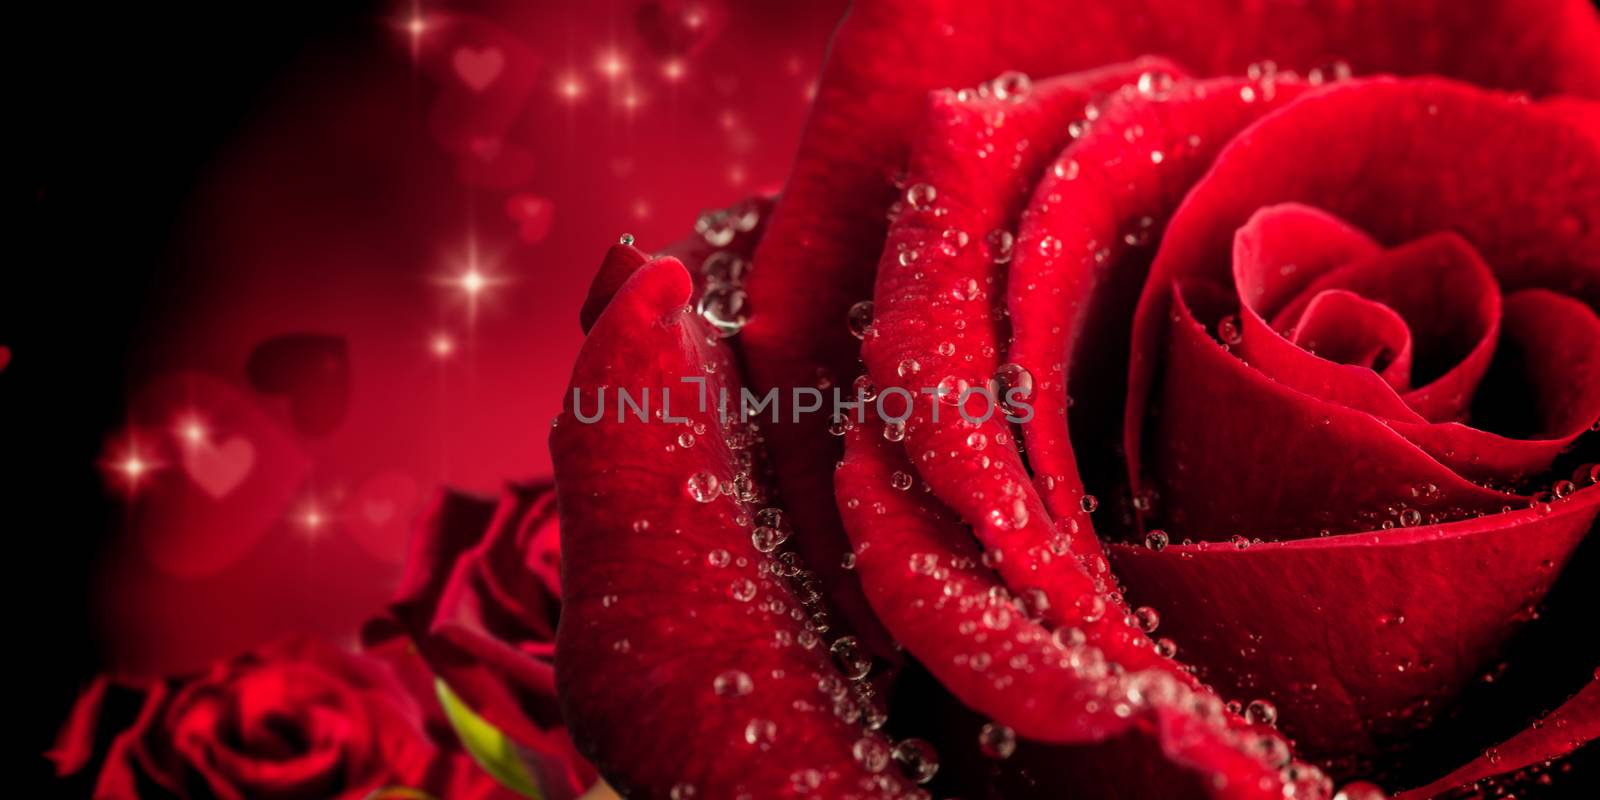 Composite image of rose by Wavebreakmedia